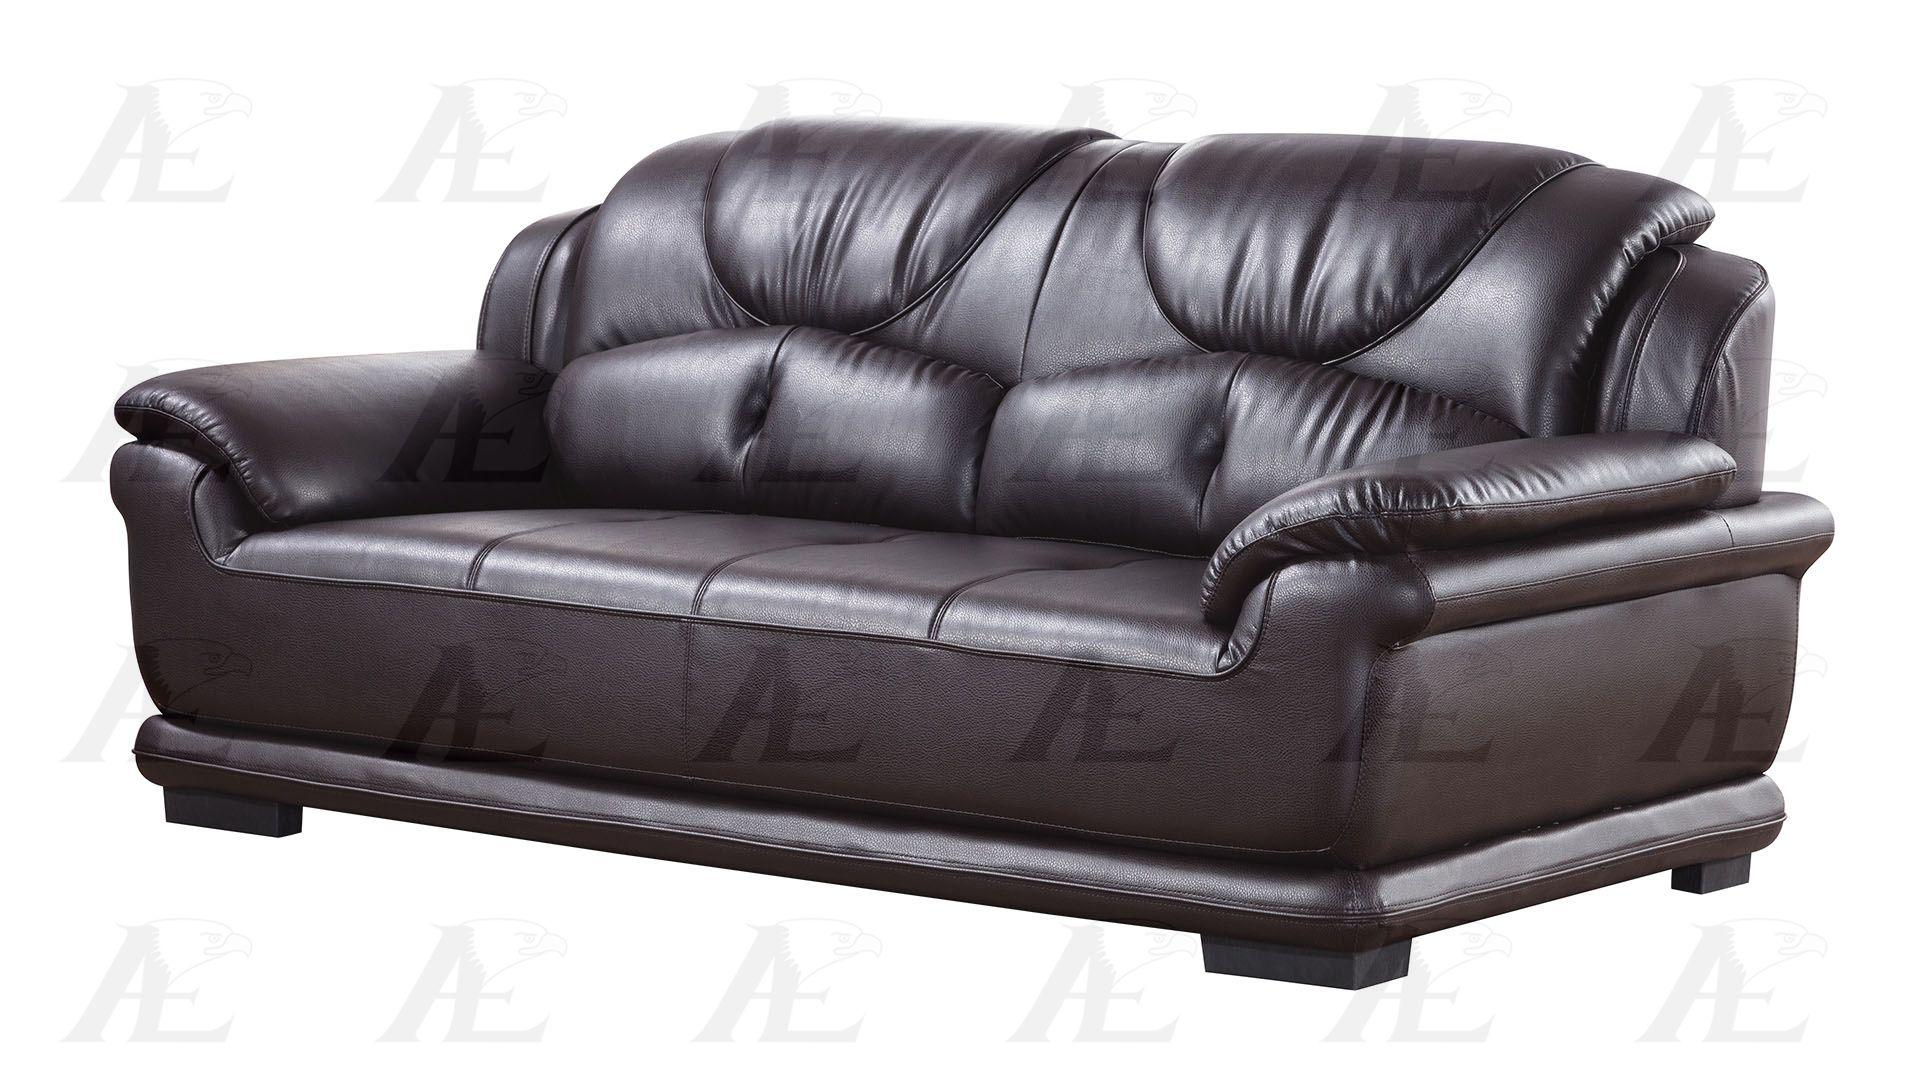 

    
American Eagle Furniture AE601-DC Sofa Loveseat and Chair Set Chocolate AE601-DC Set-3
